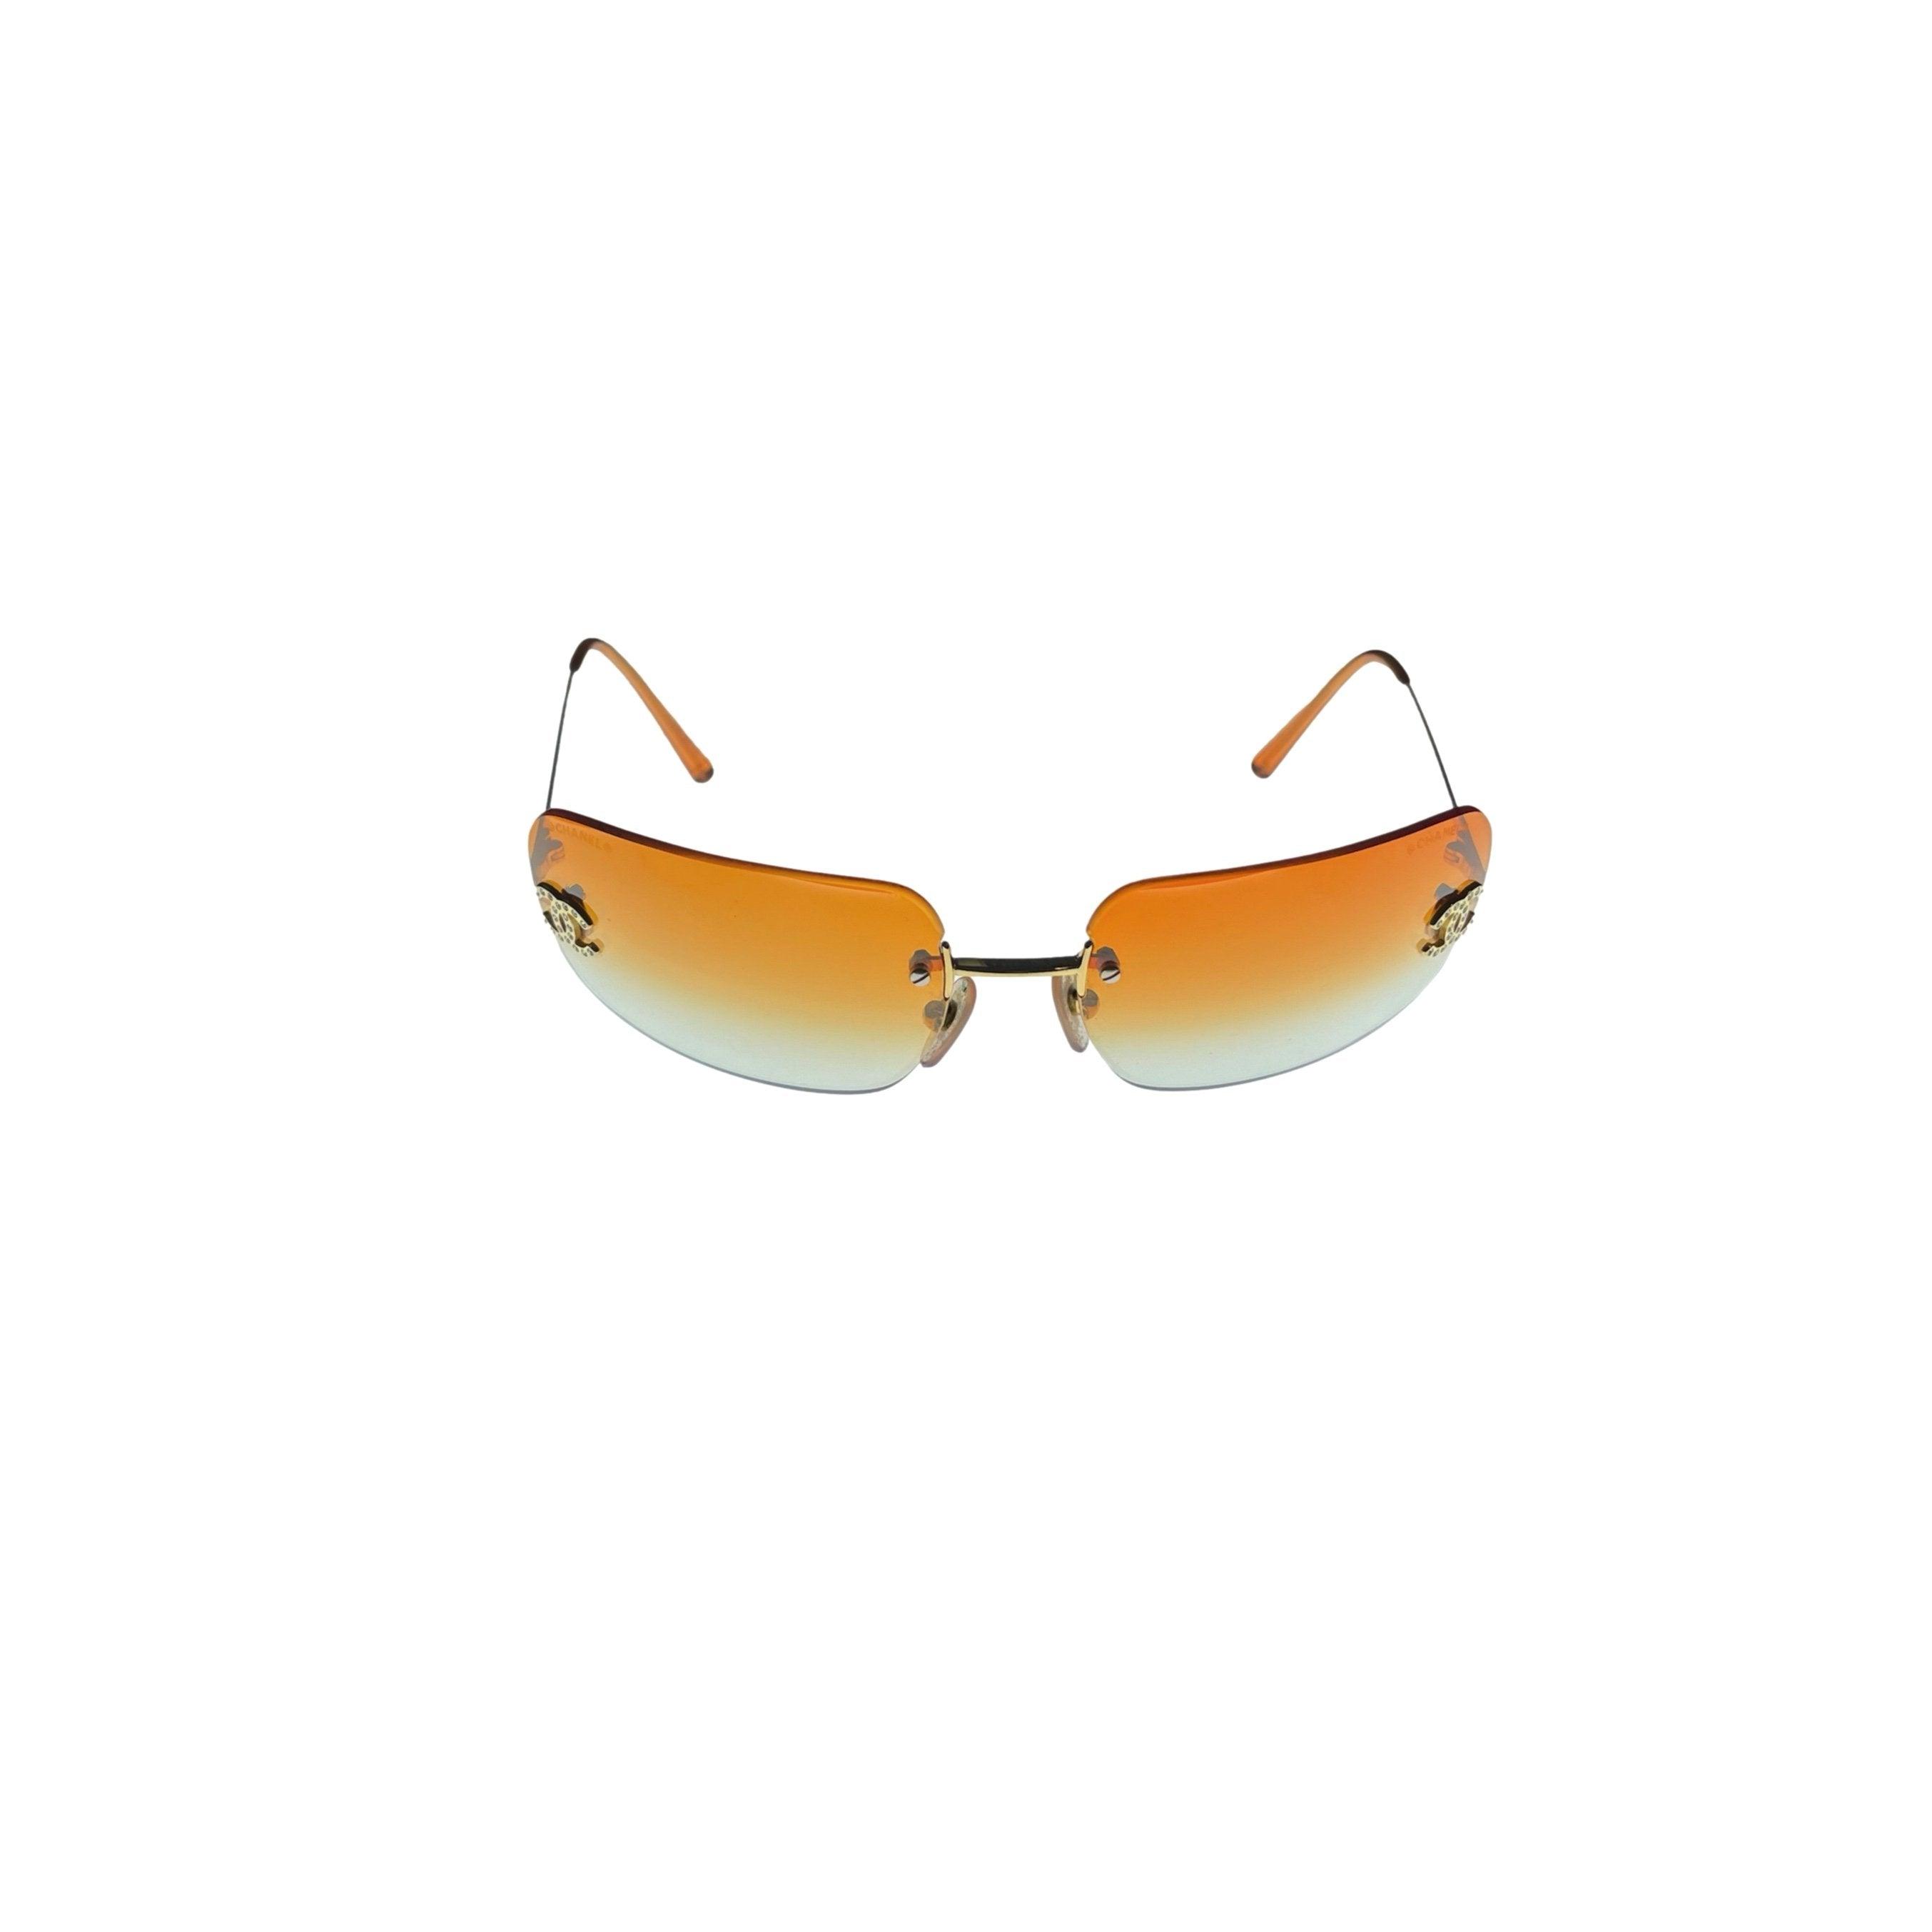 Treasures of NYC - Chanel Orange Rimless Sunglasses